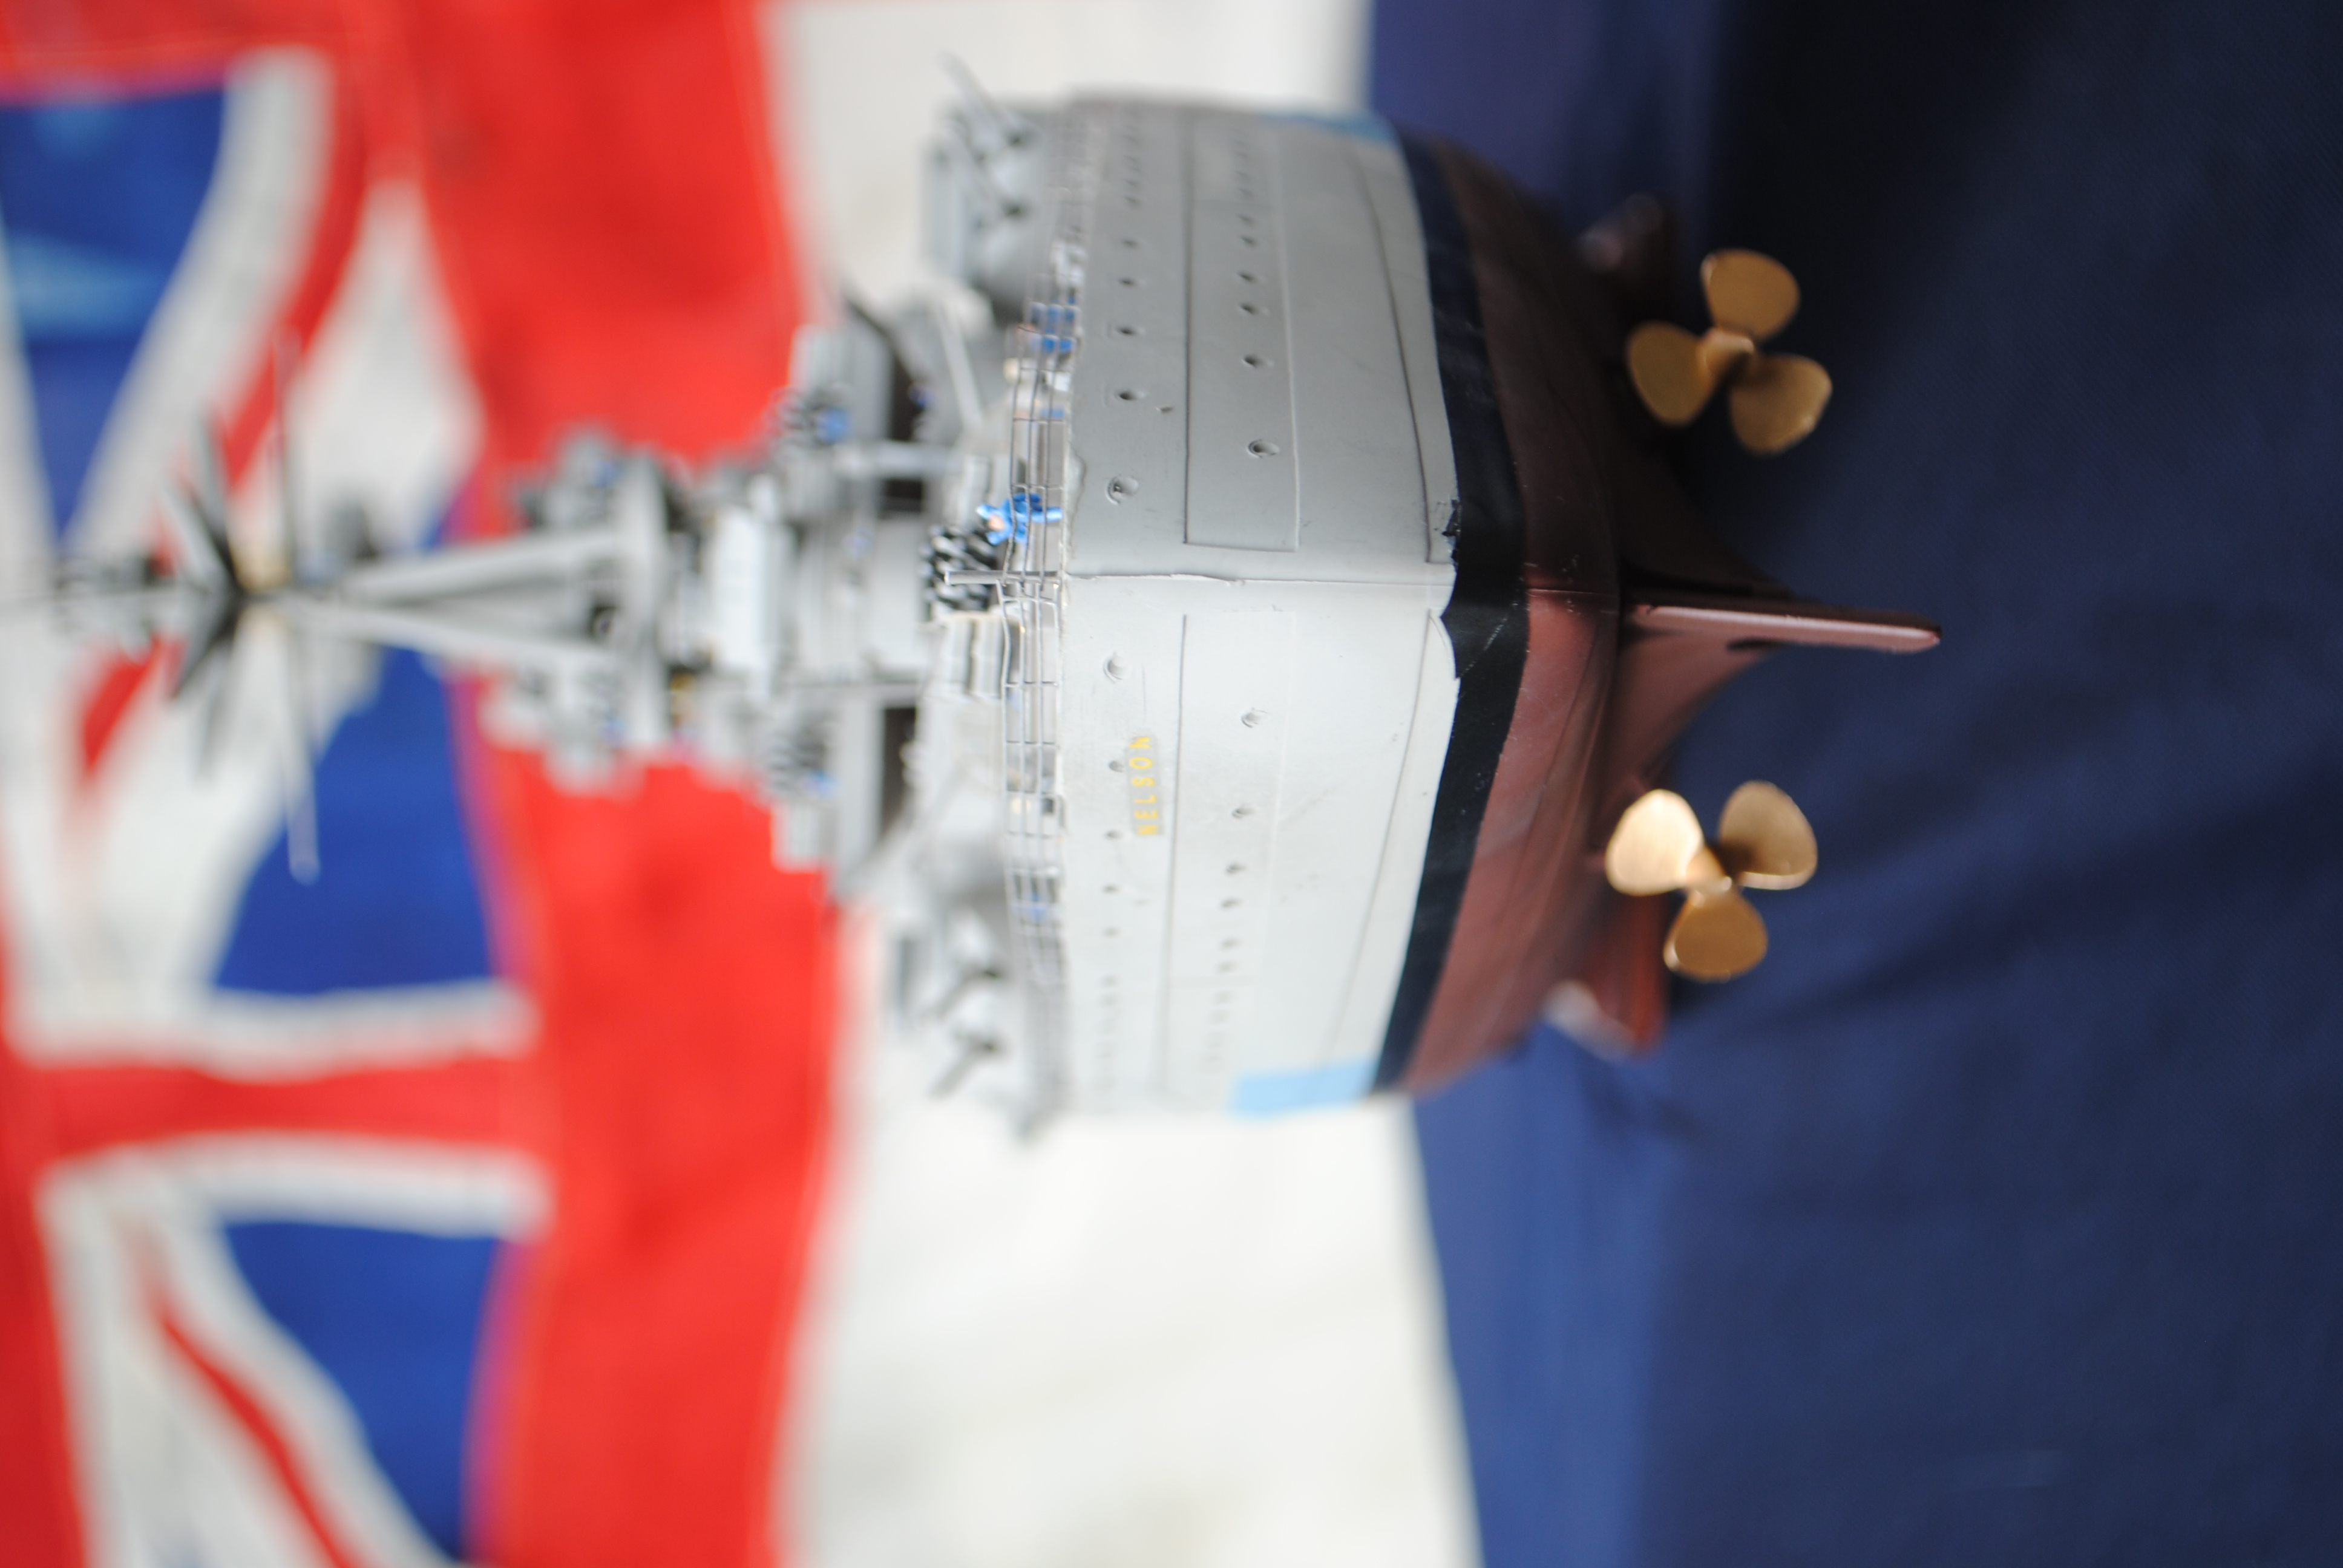 Trumpeter 03708 HMS NELSON